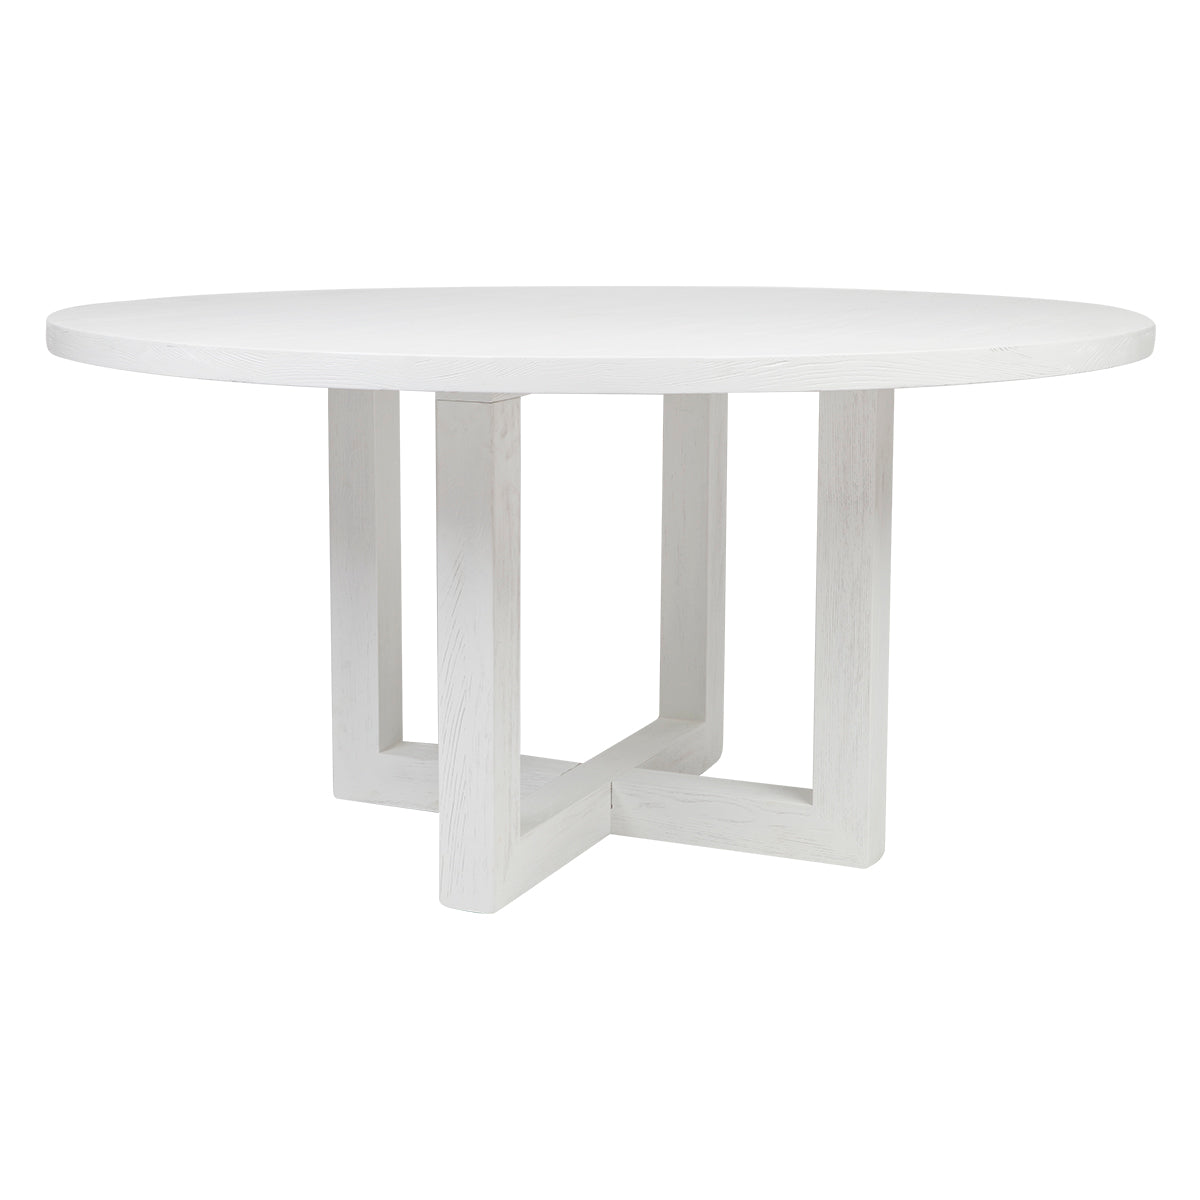 Leeton Round Dining Table - White